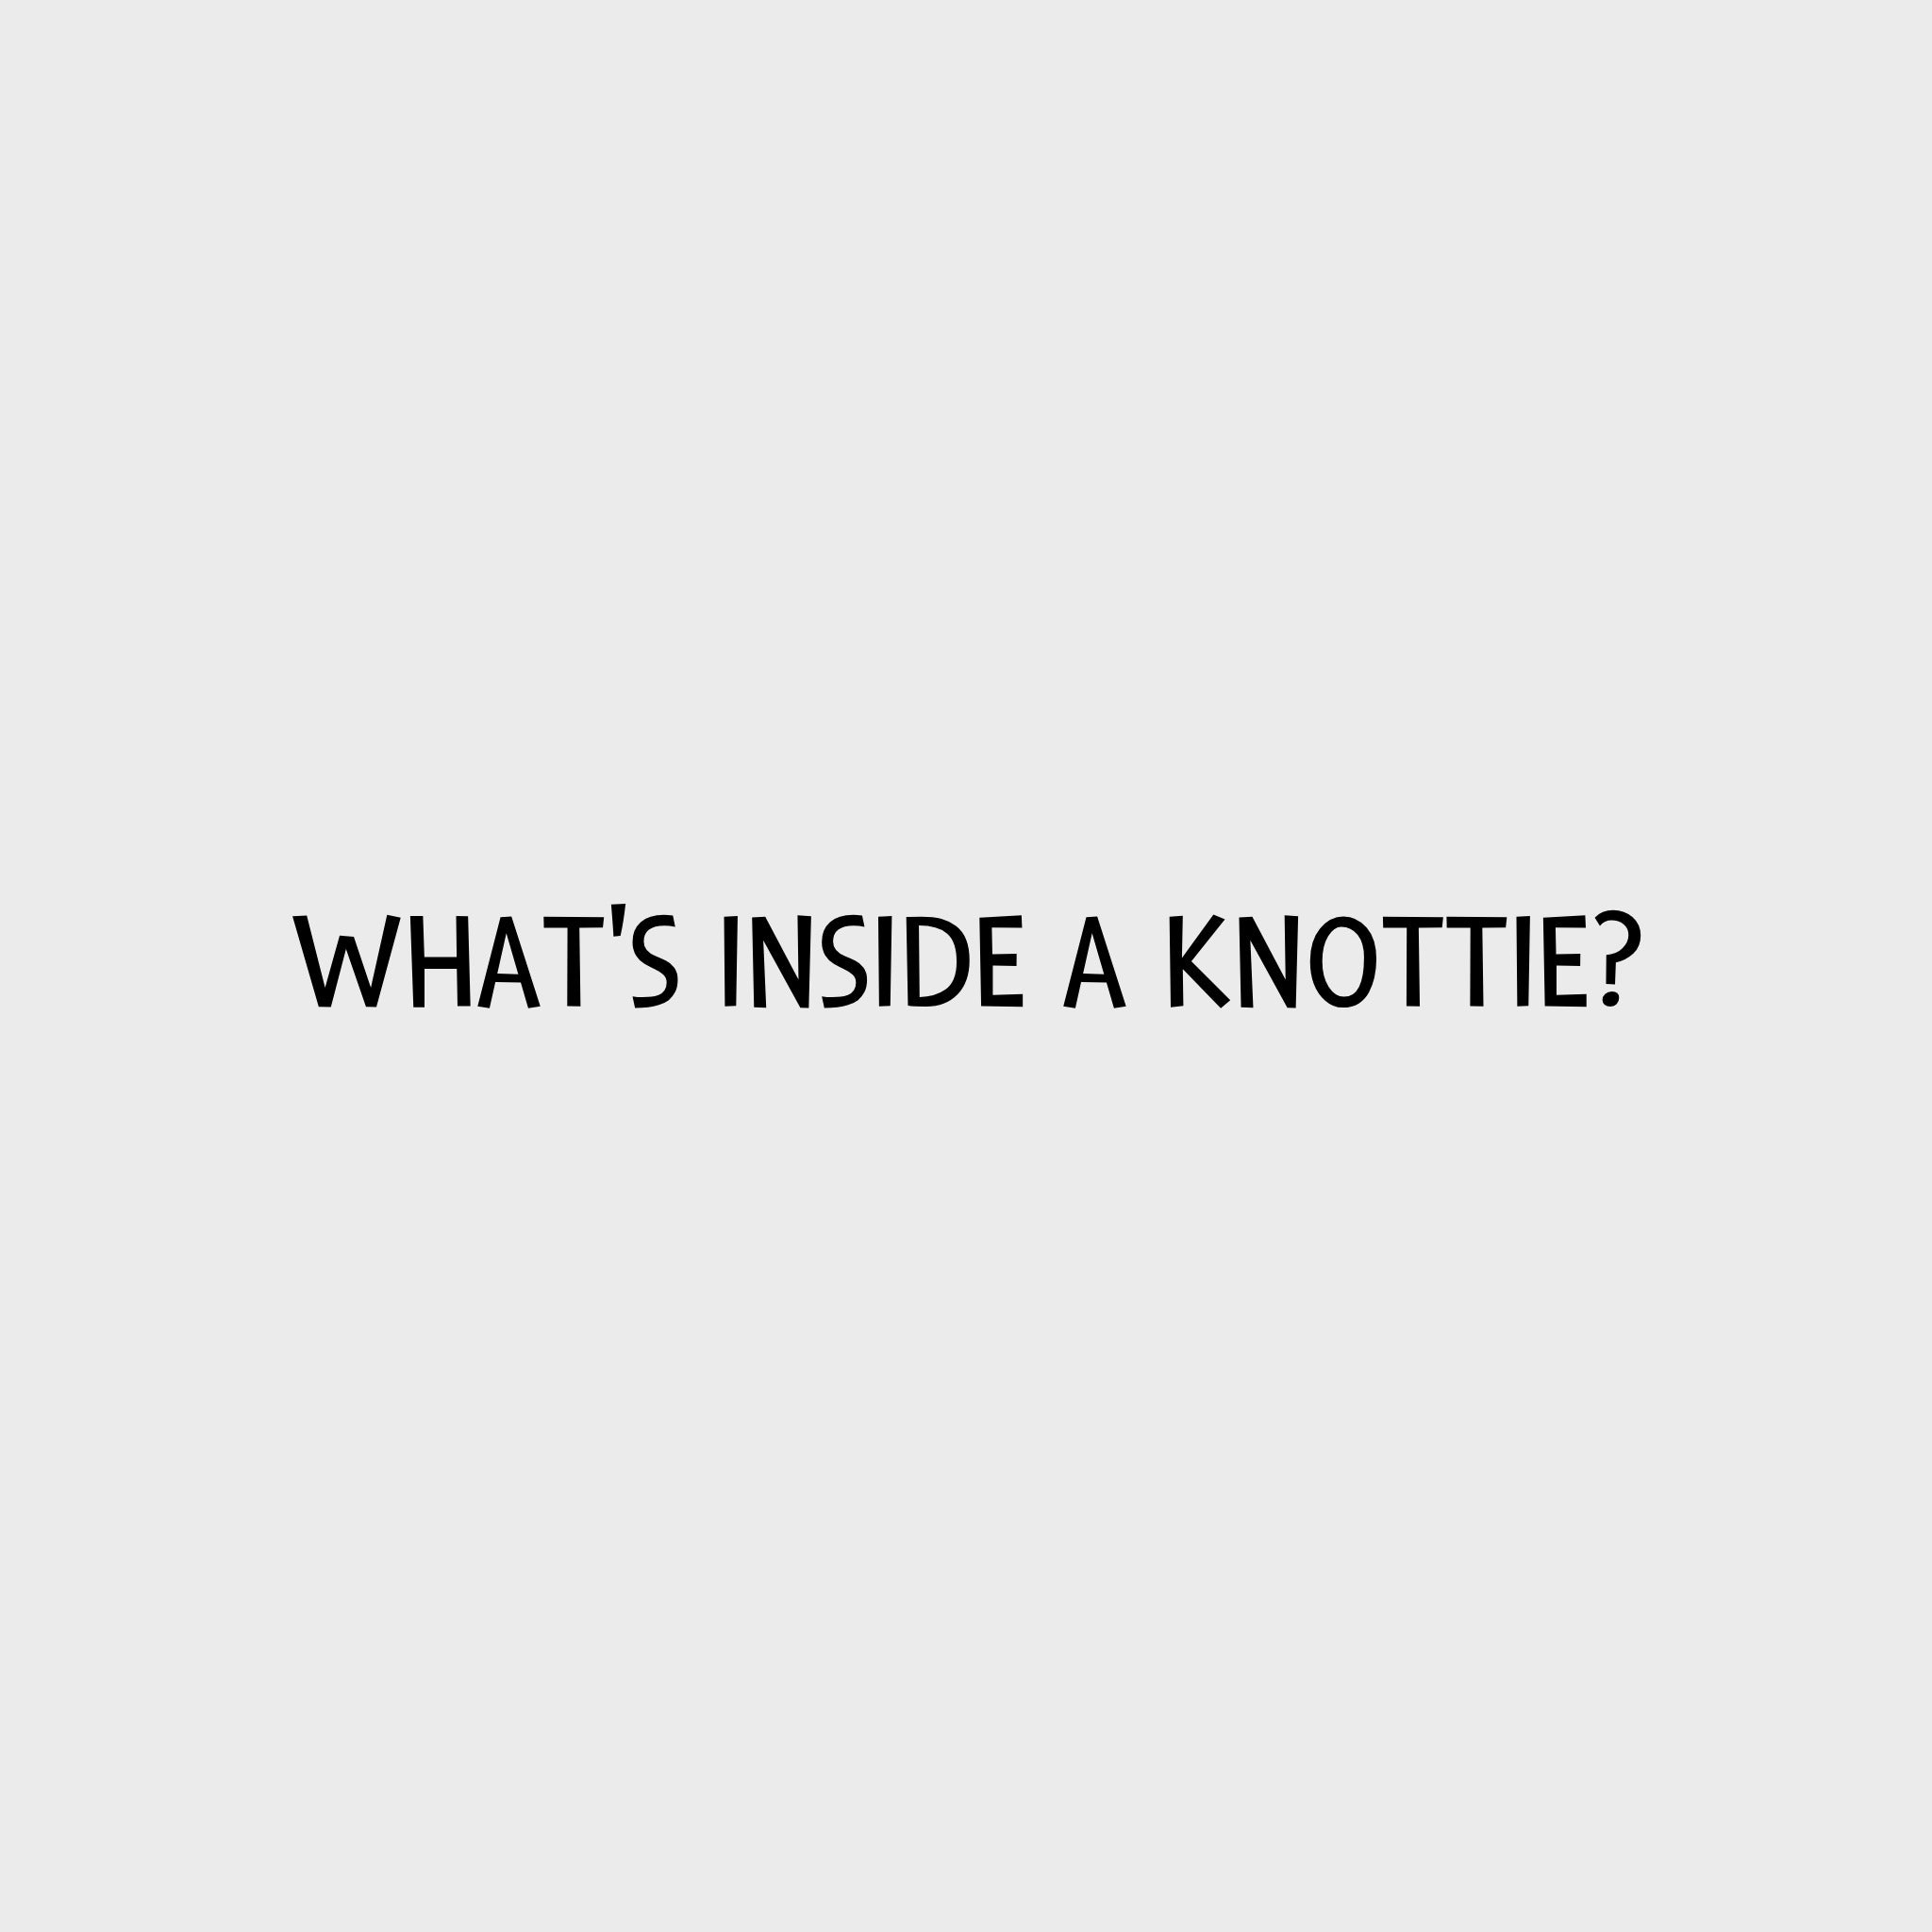 Video - What's inside a Knottie?